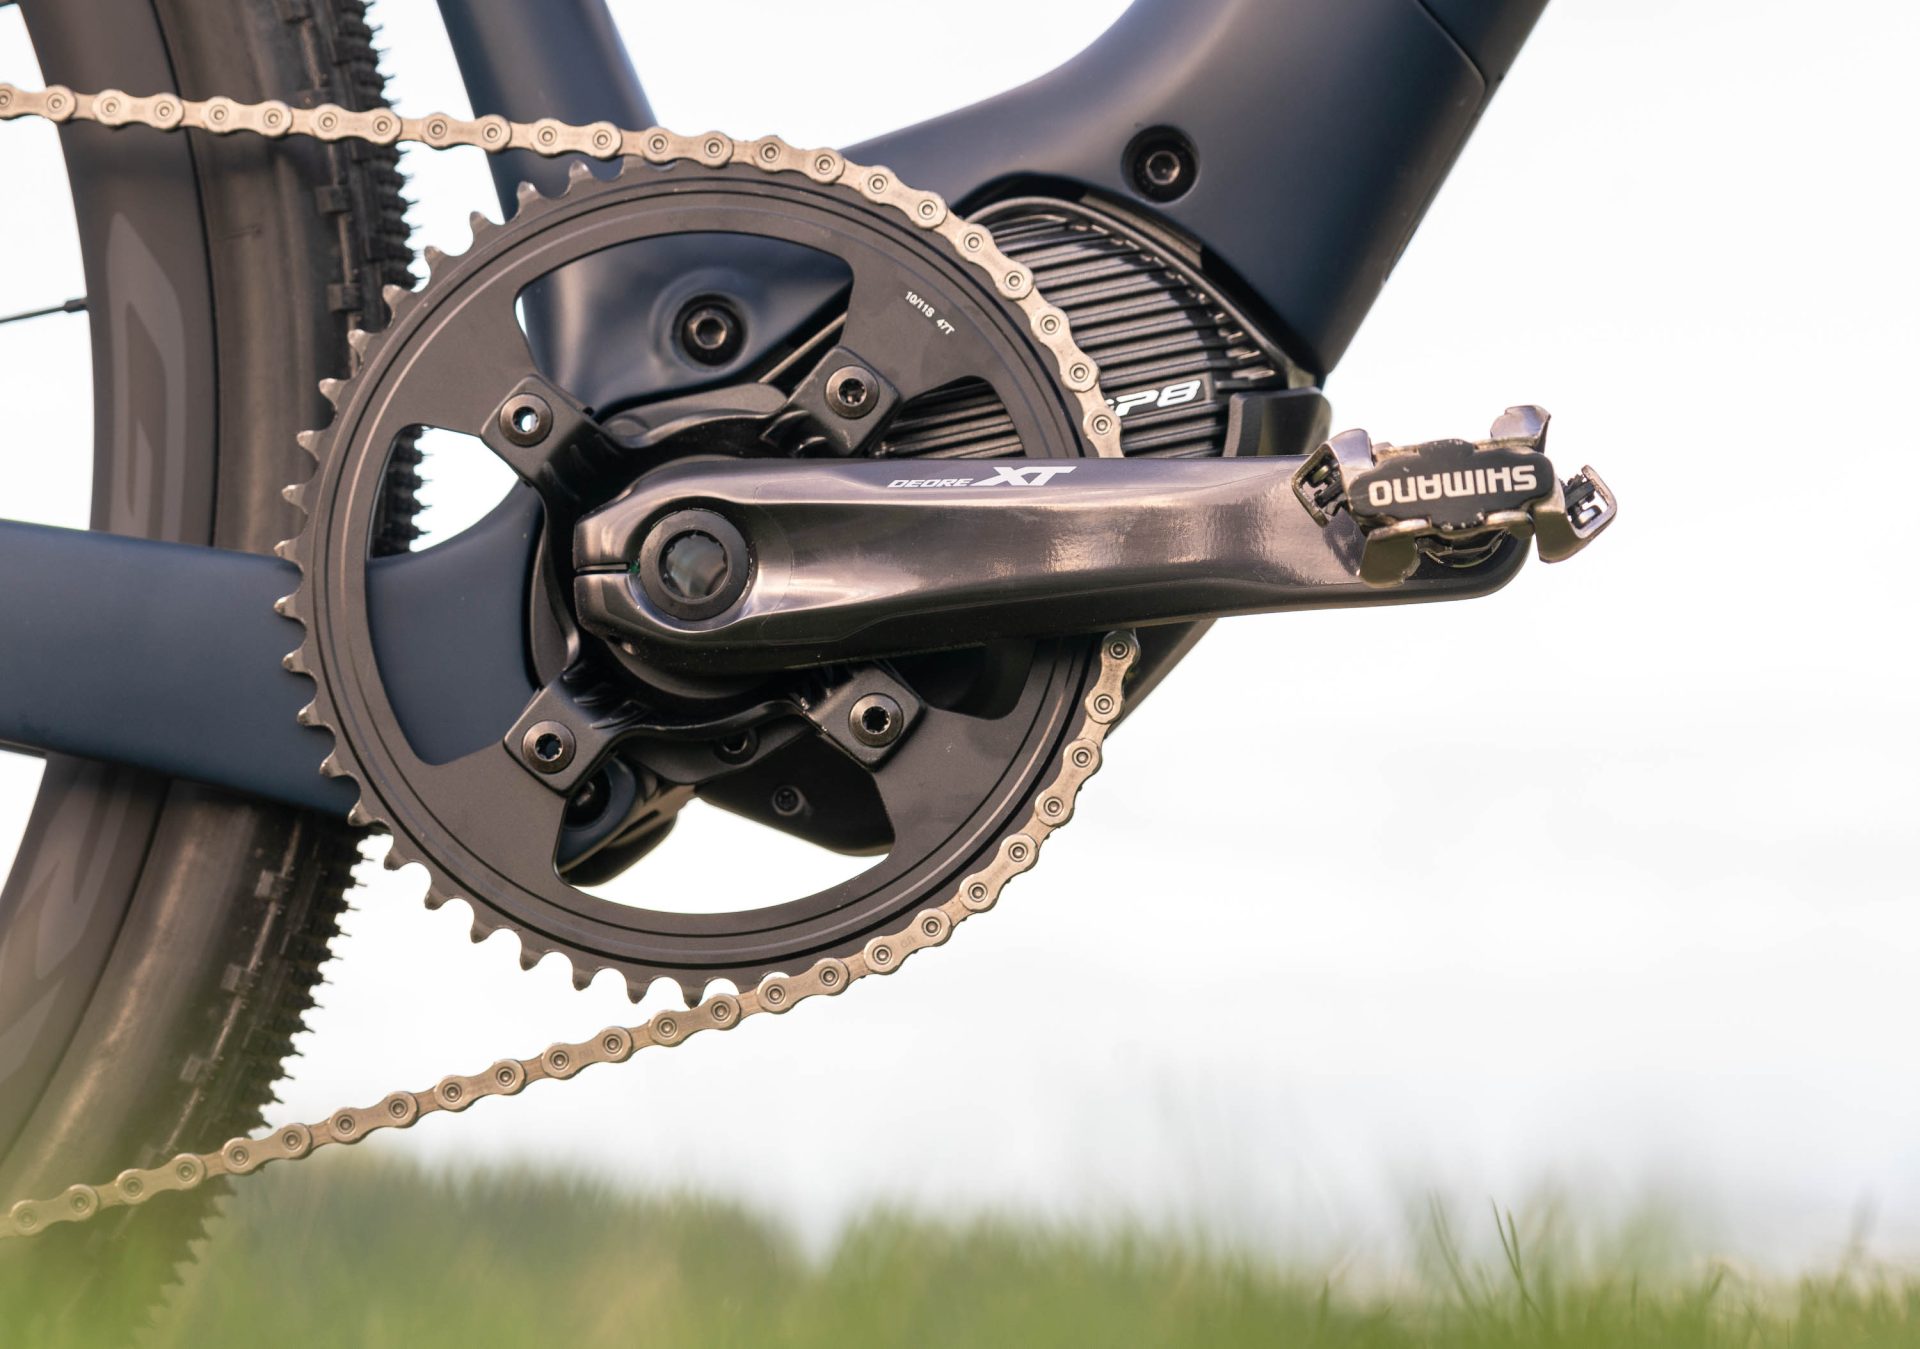 Shimano EP801 e-assist mid-drive motor unit on Moots Express e-gravel bike